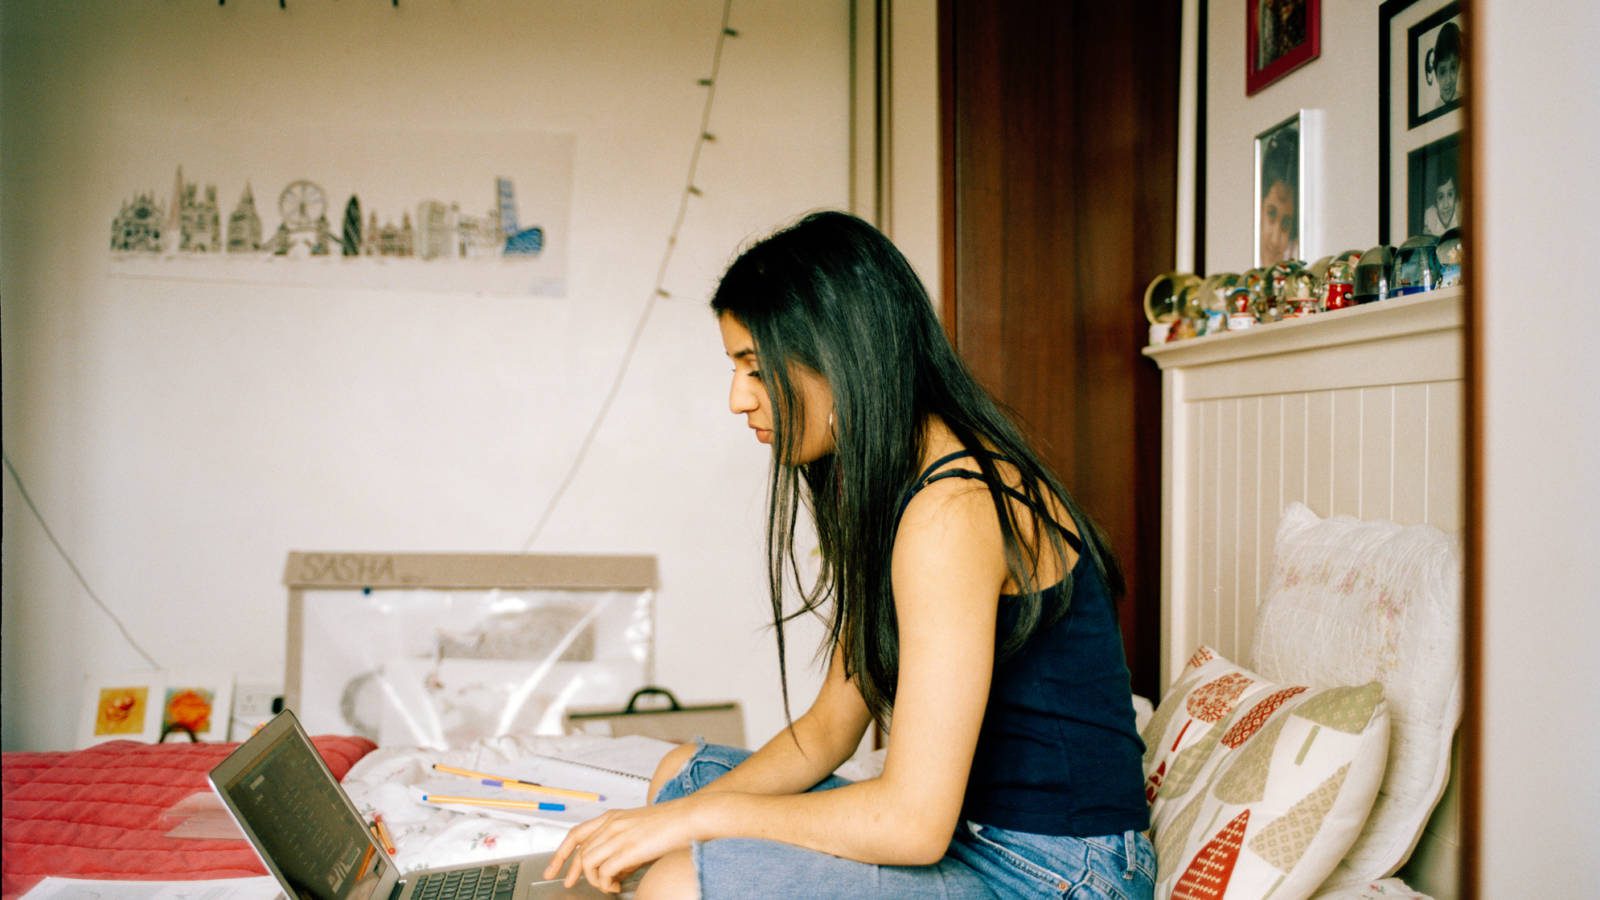 profile shot of teenage girl in her bedroom, working on laptop